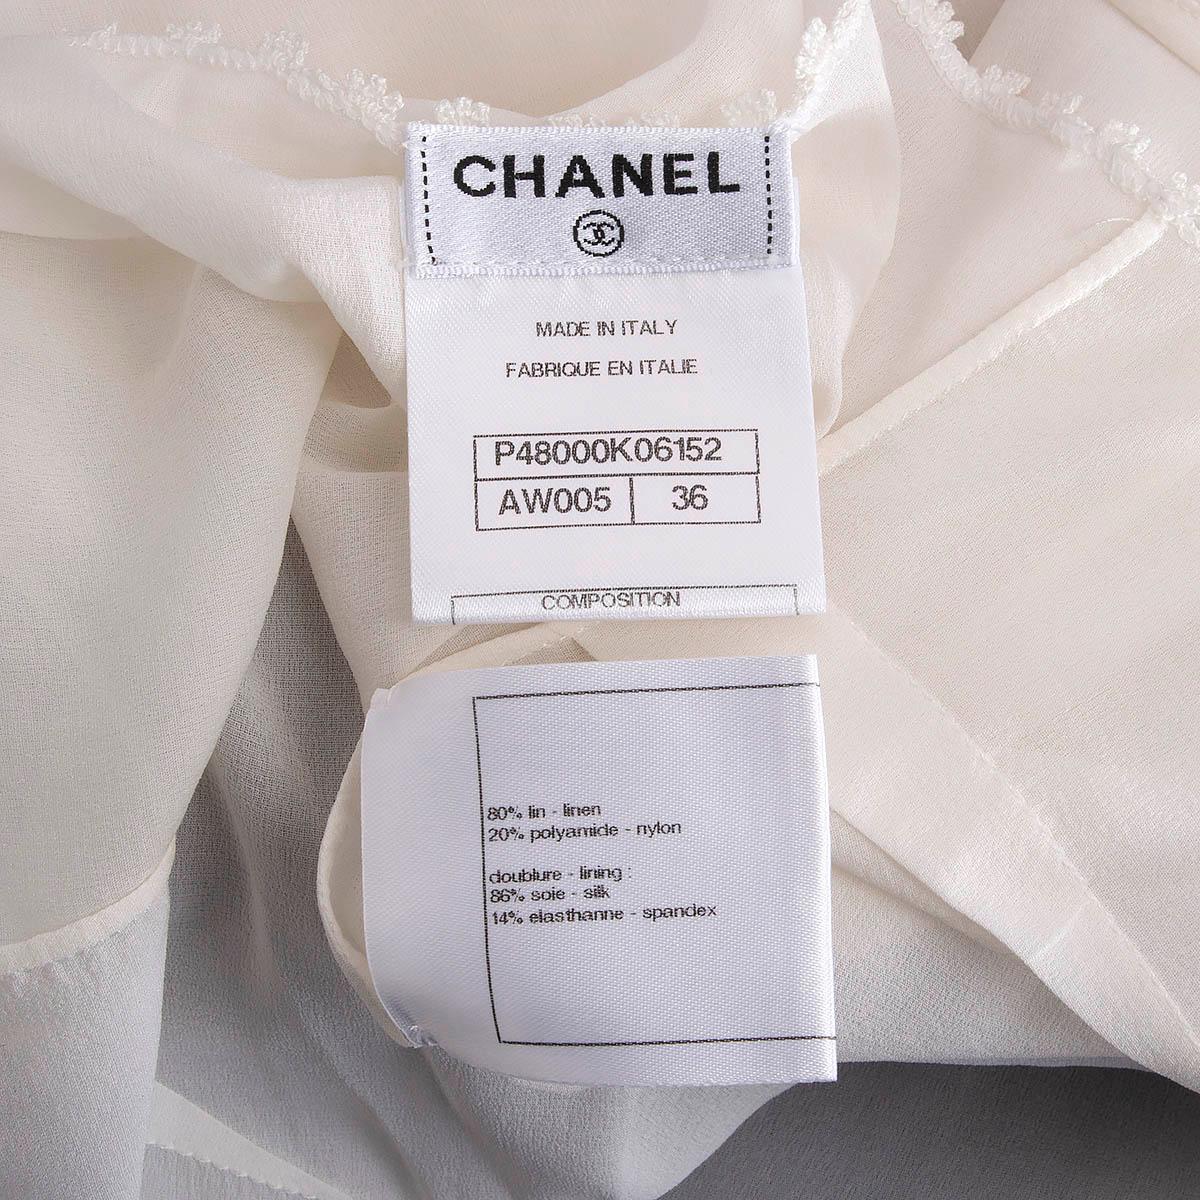 CHANEL ivory linen 2014 14P RUFFLED TIERED KNIT Dress 36 XS 5